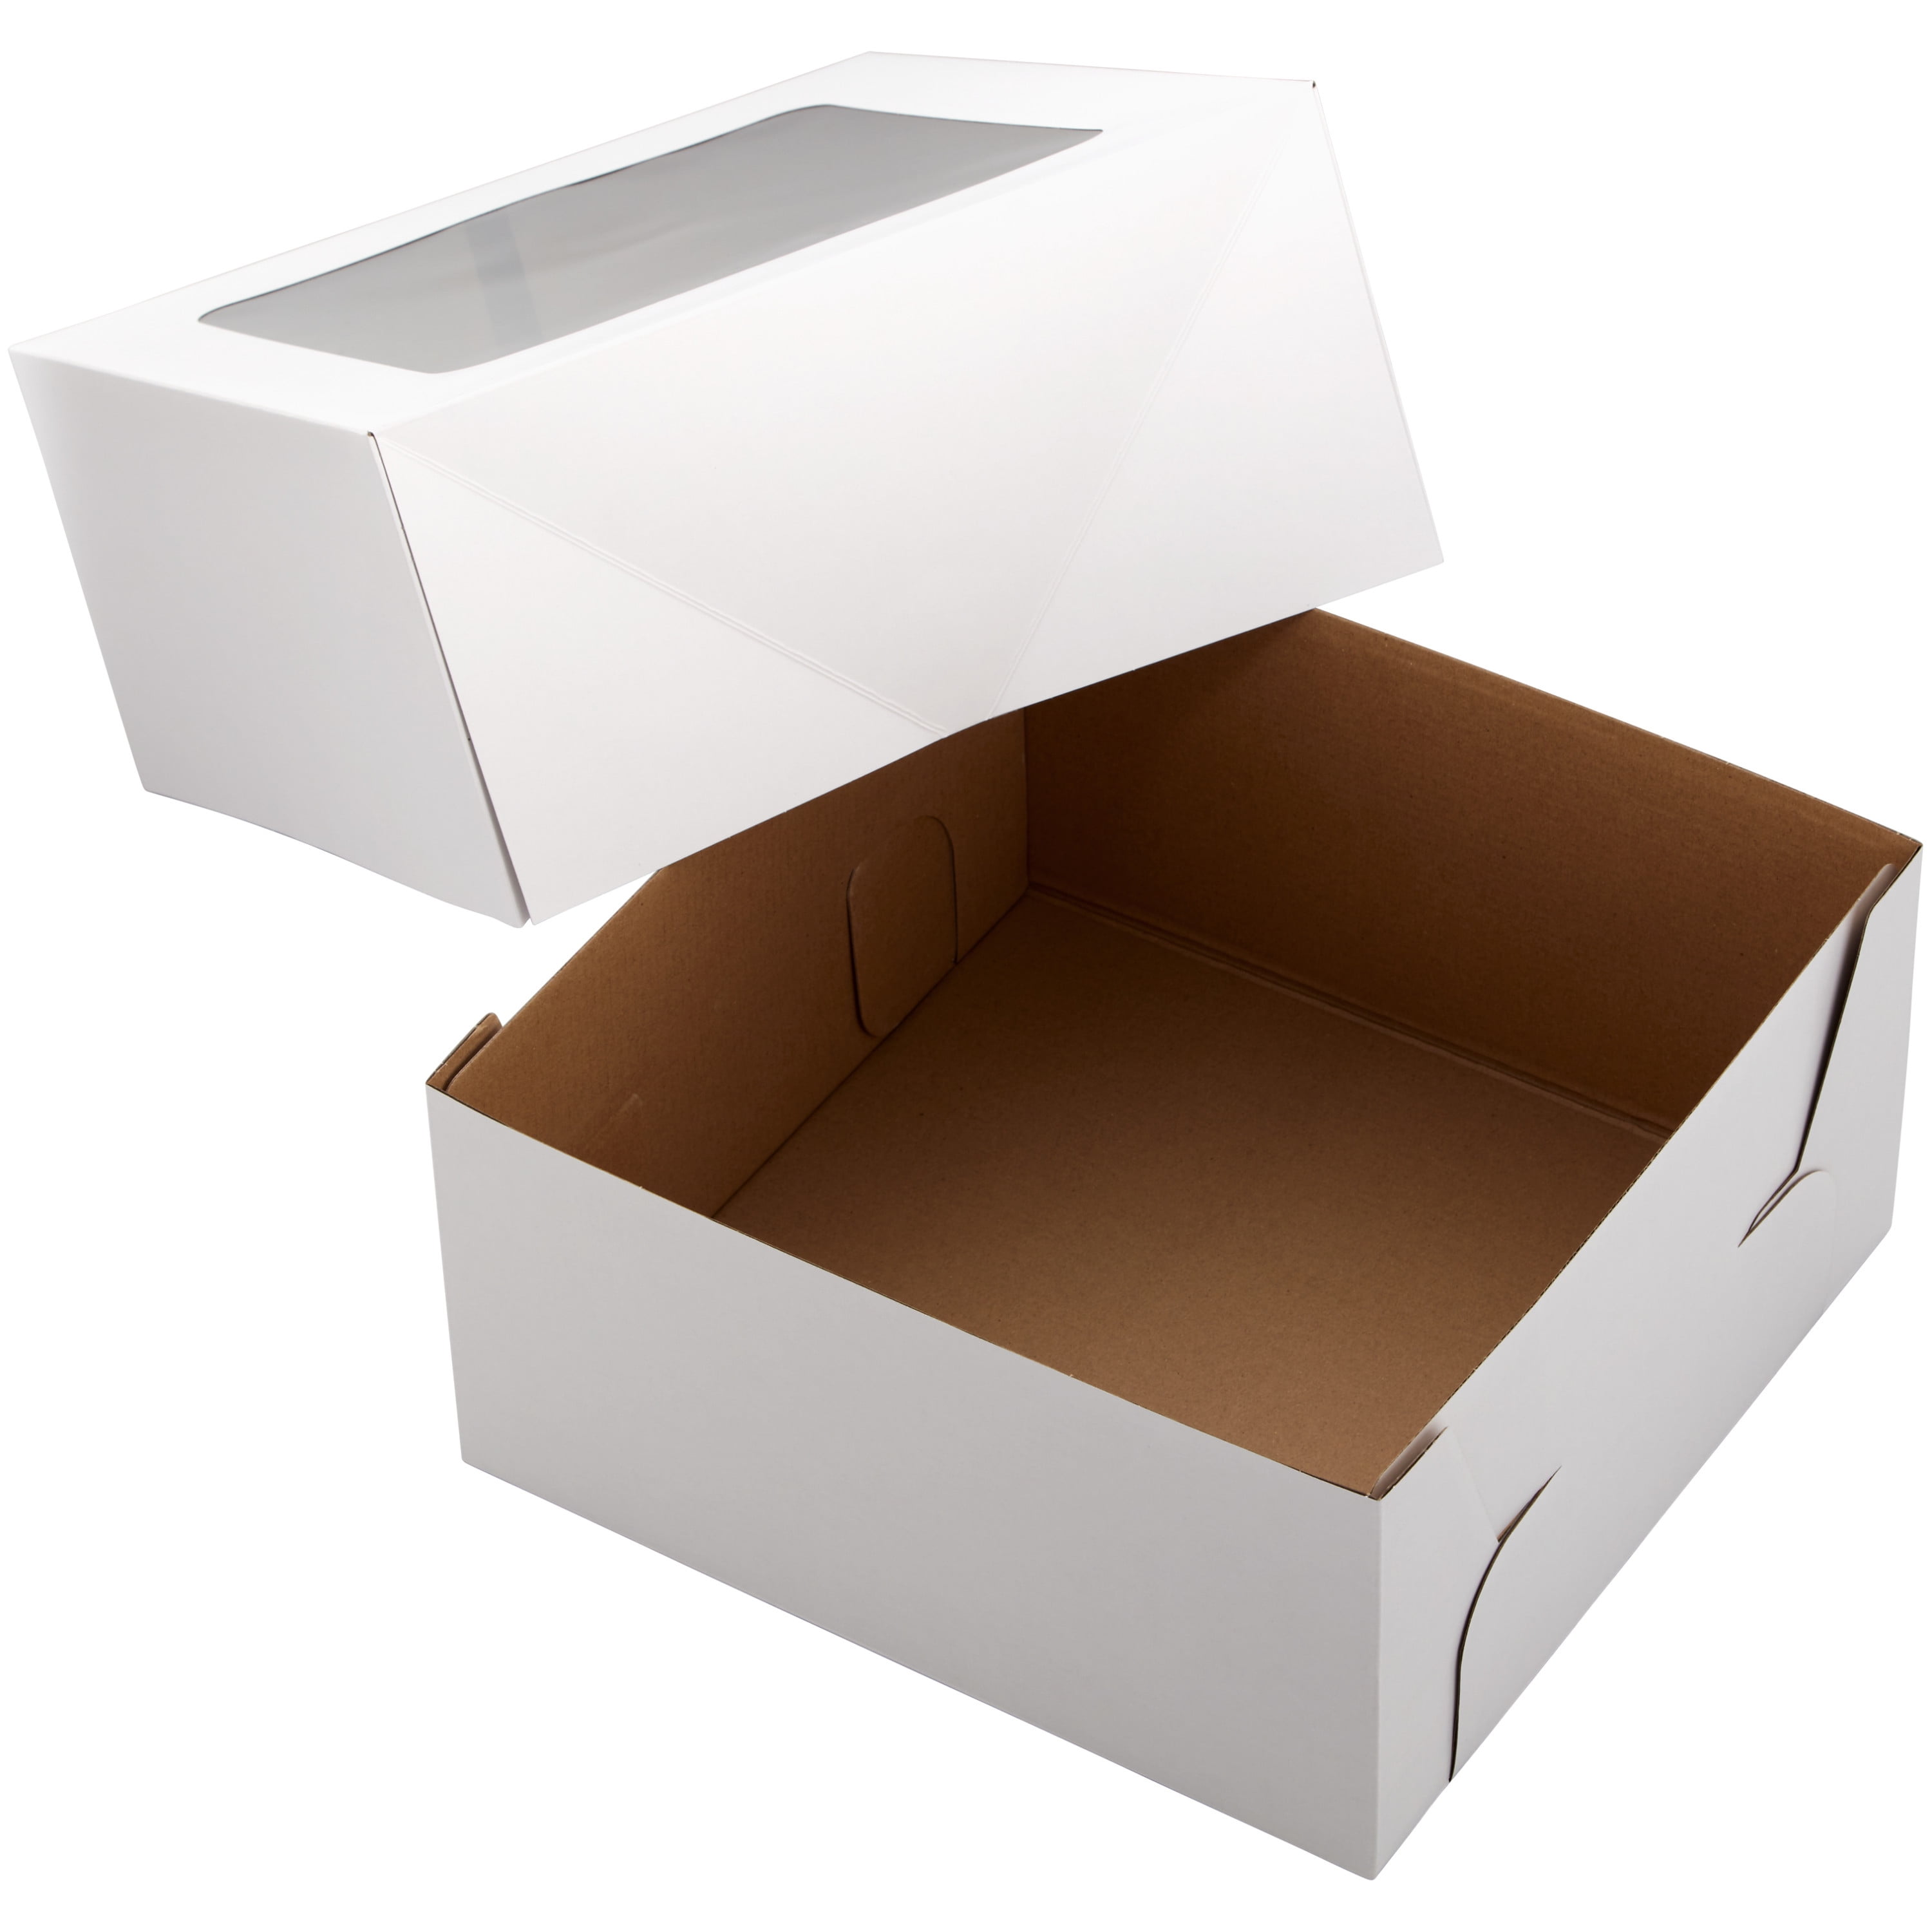 Premium Quality 8 INCH PIZZA BOX Take Away Fast Food Brown Printed Colour x 10 